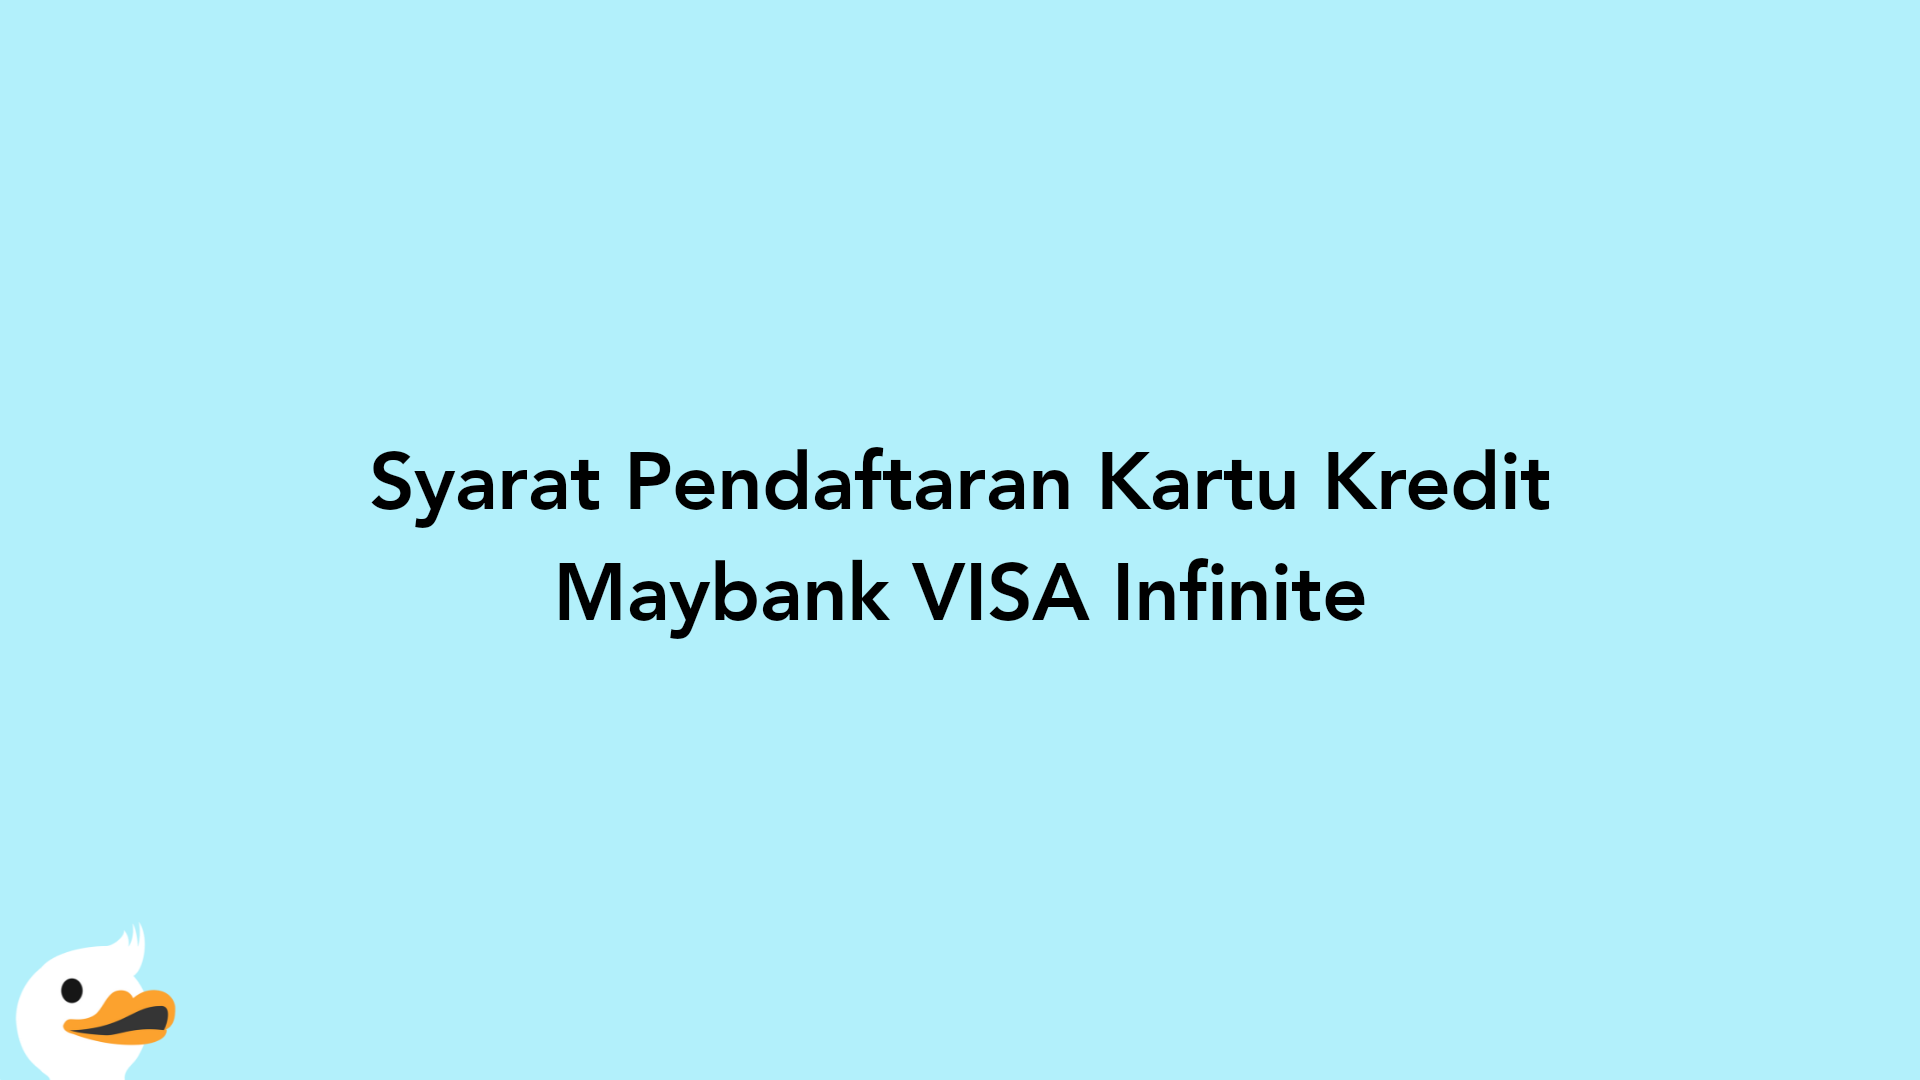 Syarat Pendaftaran Kartu Kredit Maybank VISA Infinite